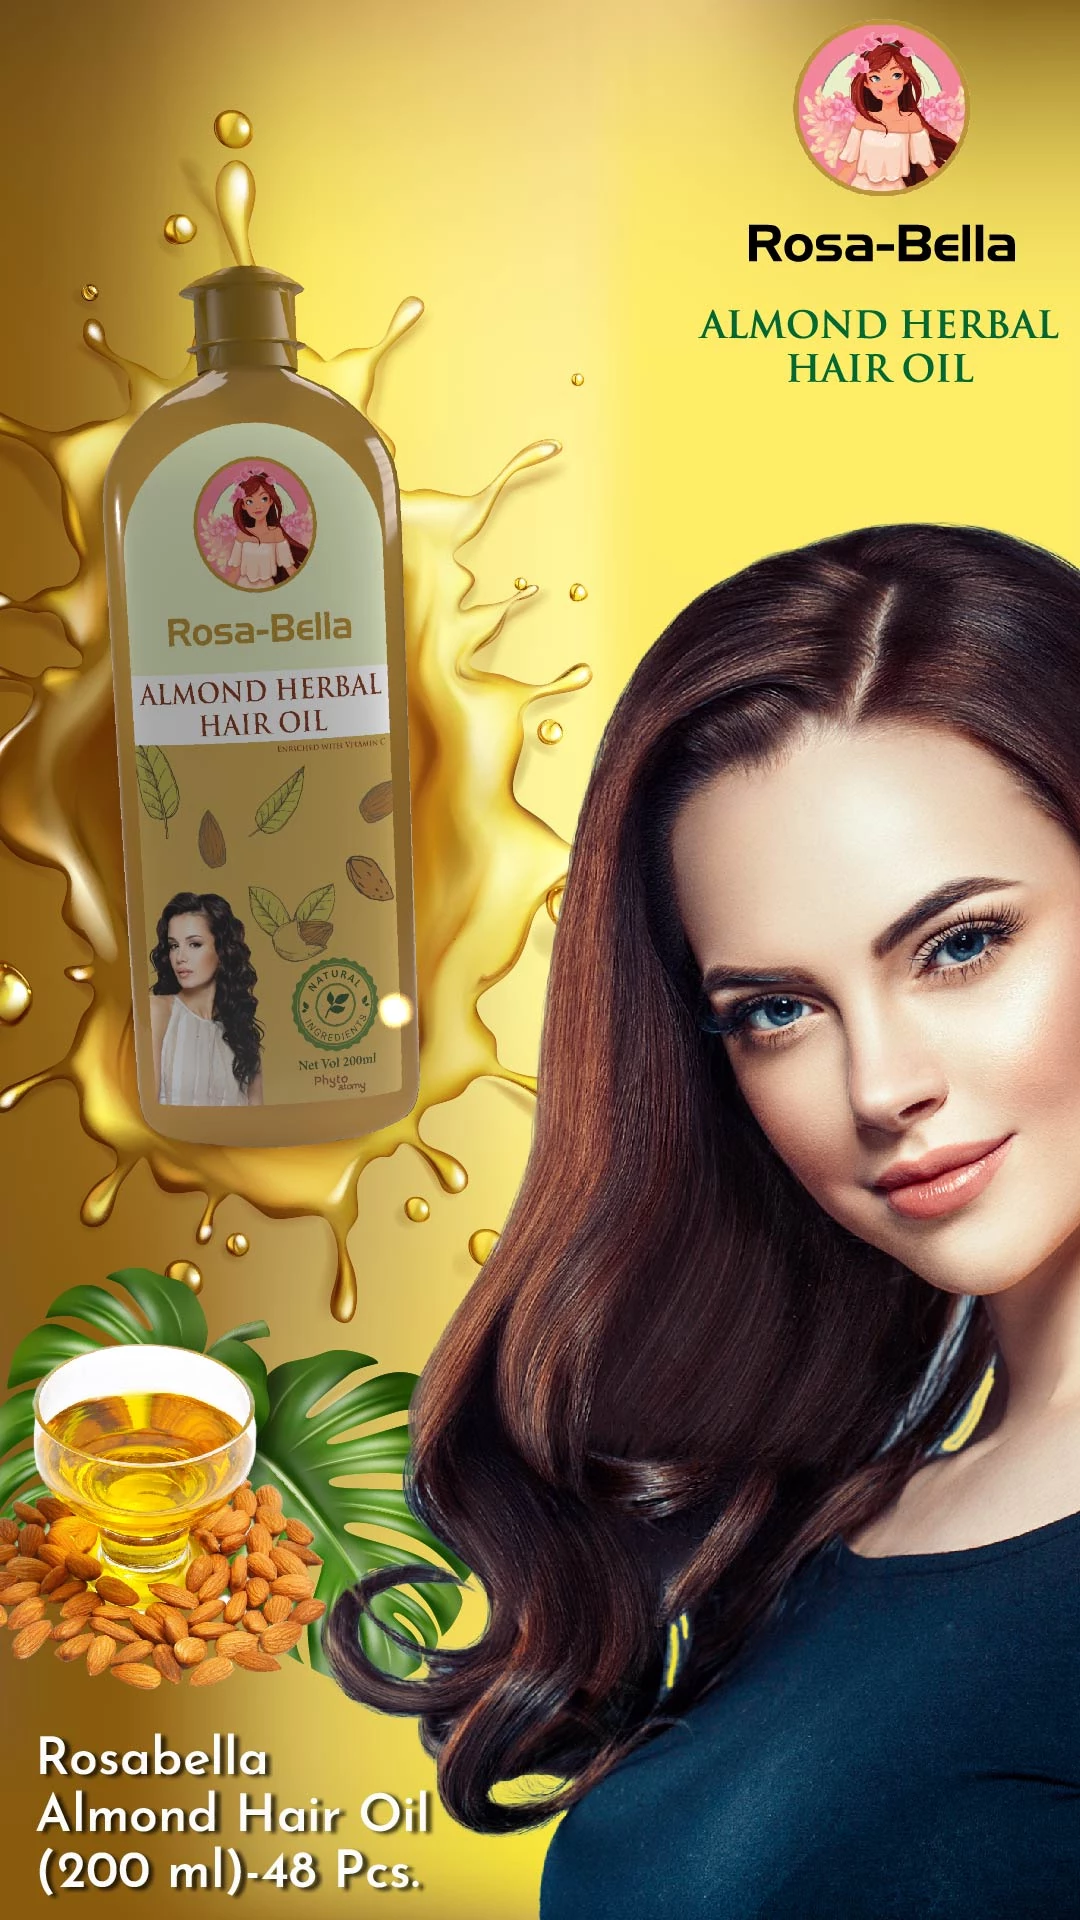 RBV B2B Rosabella Almond Hair Oil (200 ml)-48 Pcs.